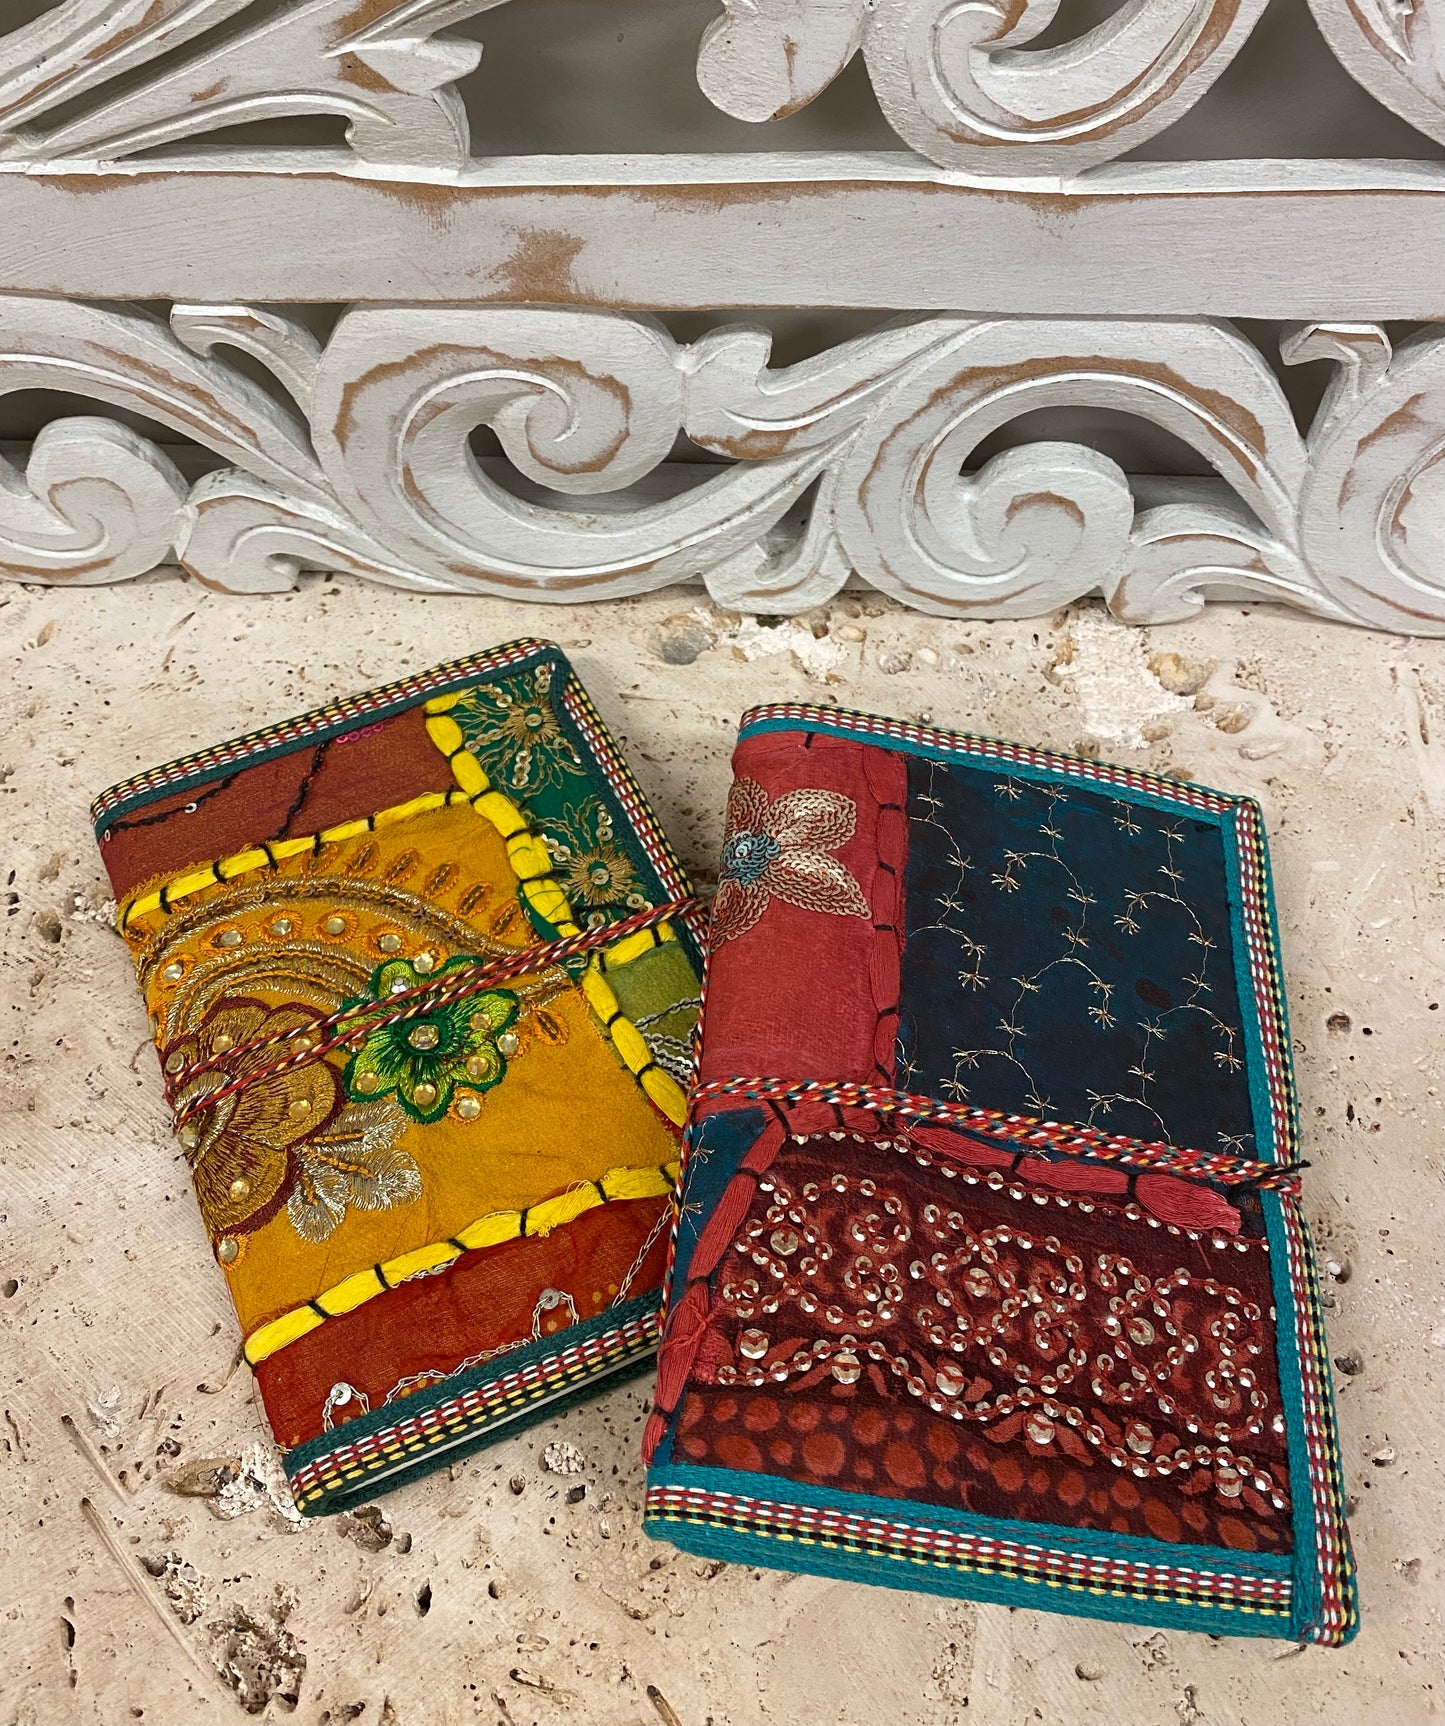 Rajastani Sequin Sari Patchwork Journals 5" x 7" from India